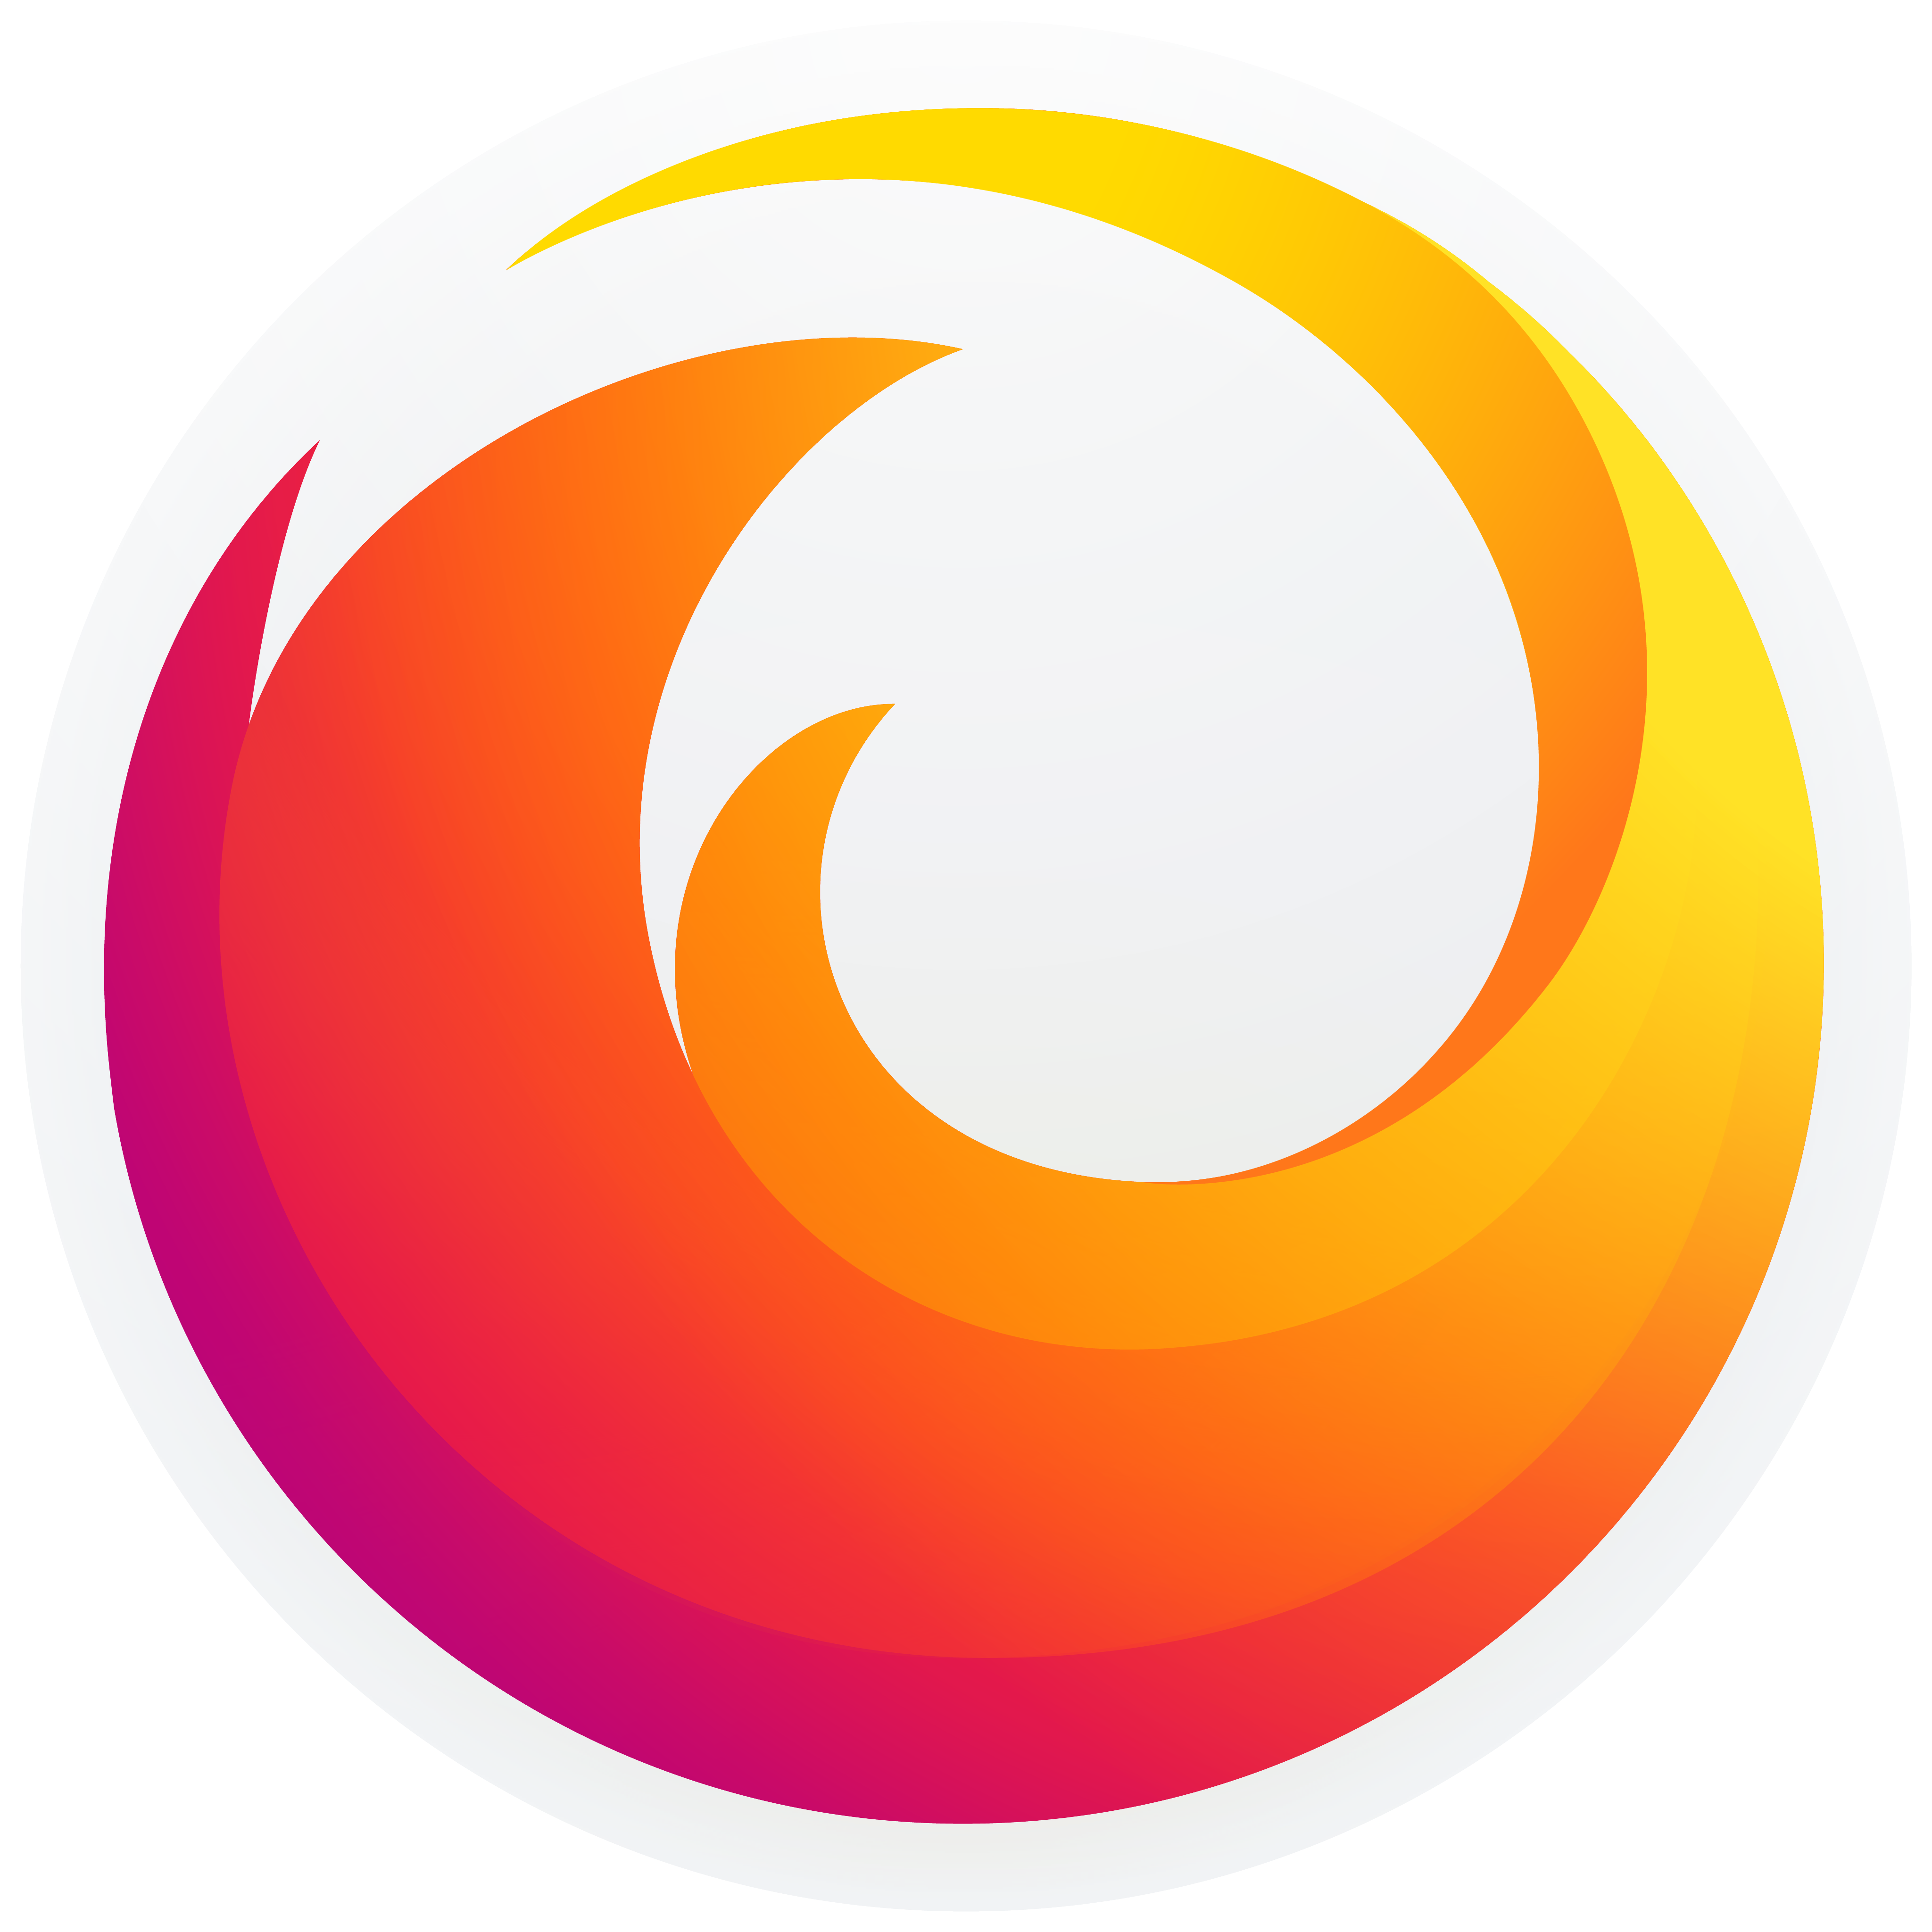 Значок Firefox. Иконка Firefox PNG. Firefox браузер. Logo браузер Firefox. Ярлык firefox